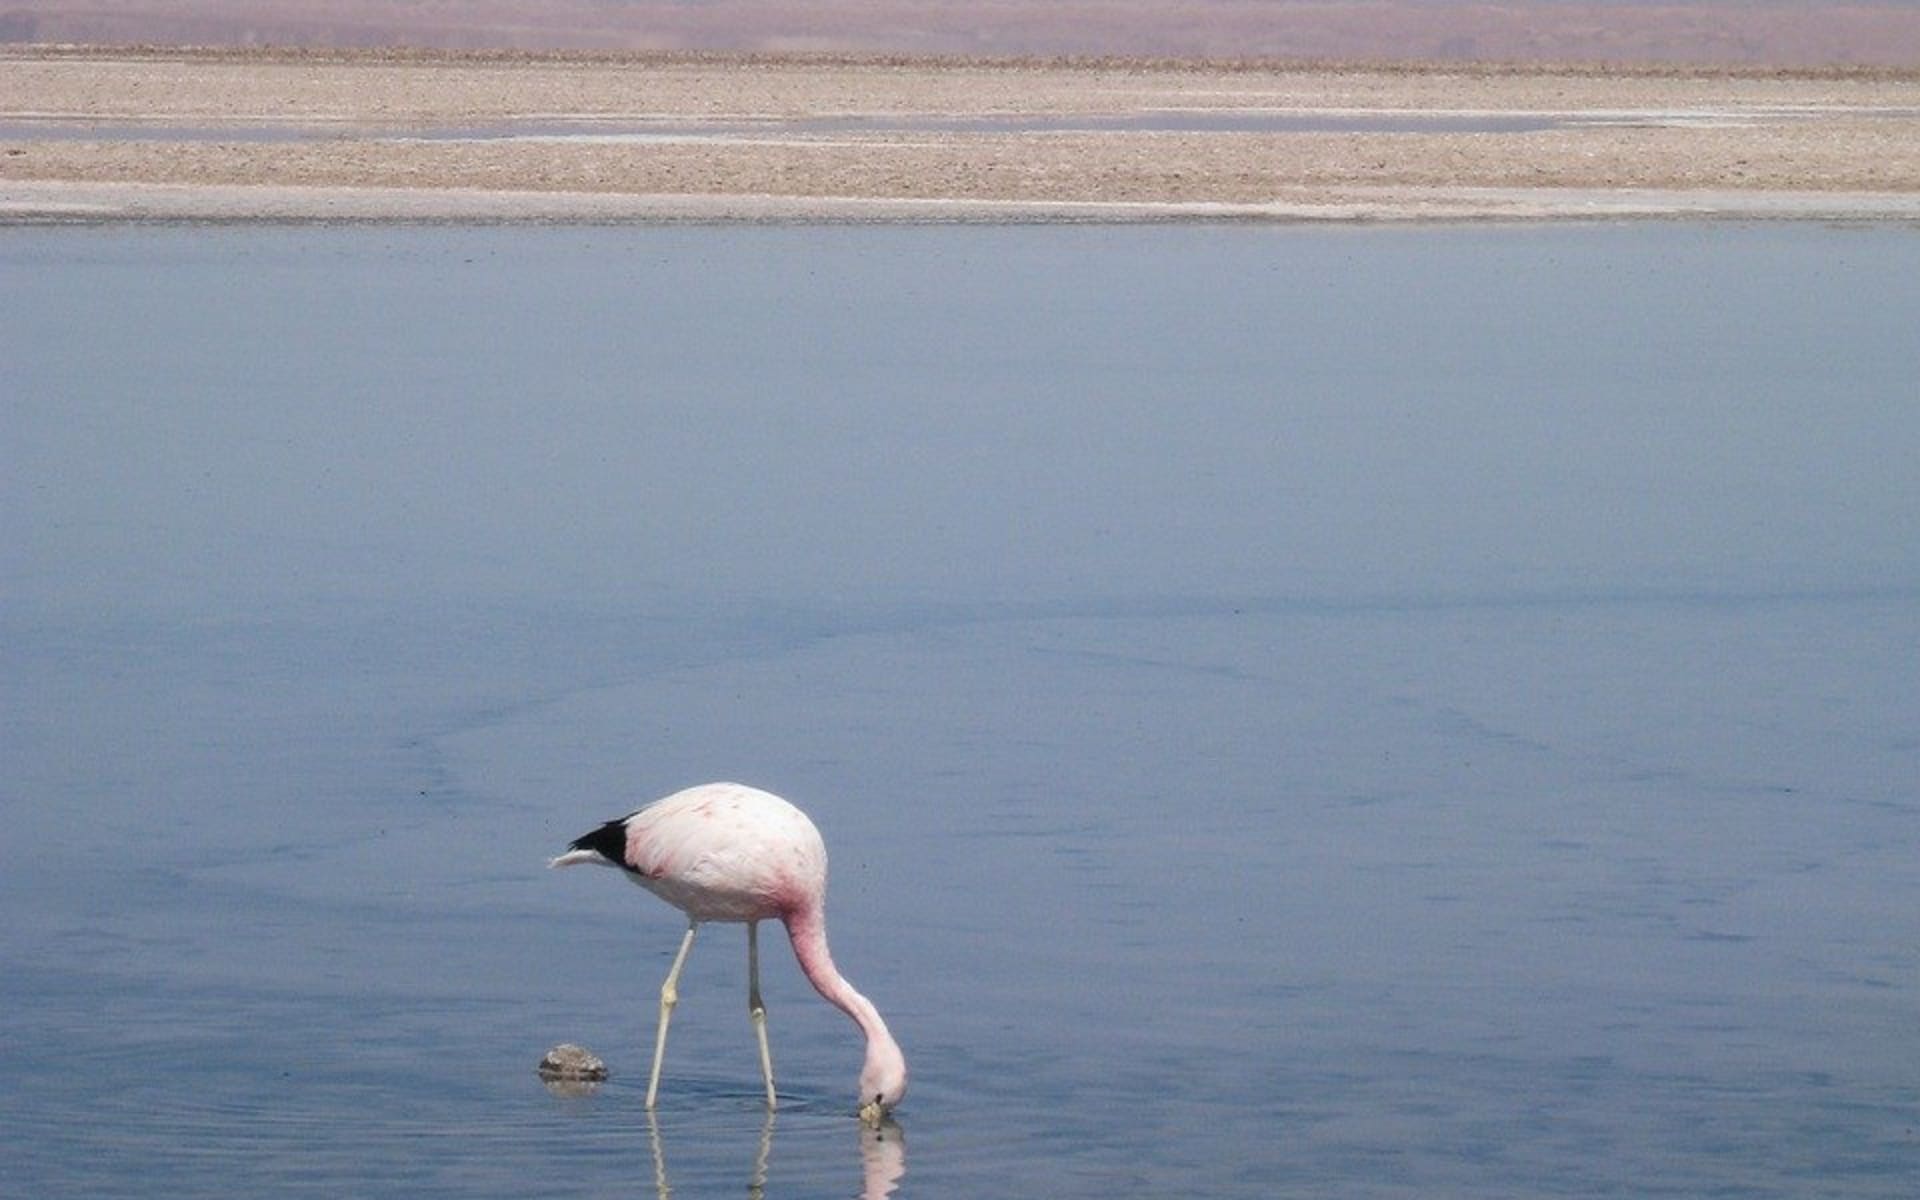 A Flamingo drinking in a Salt lake.